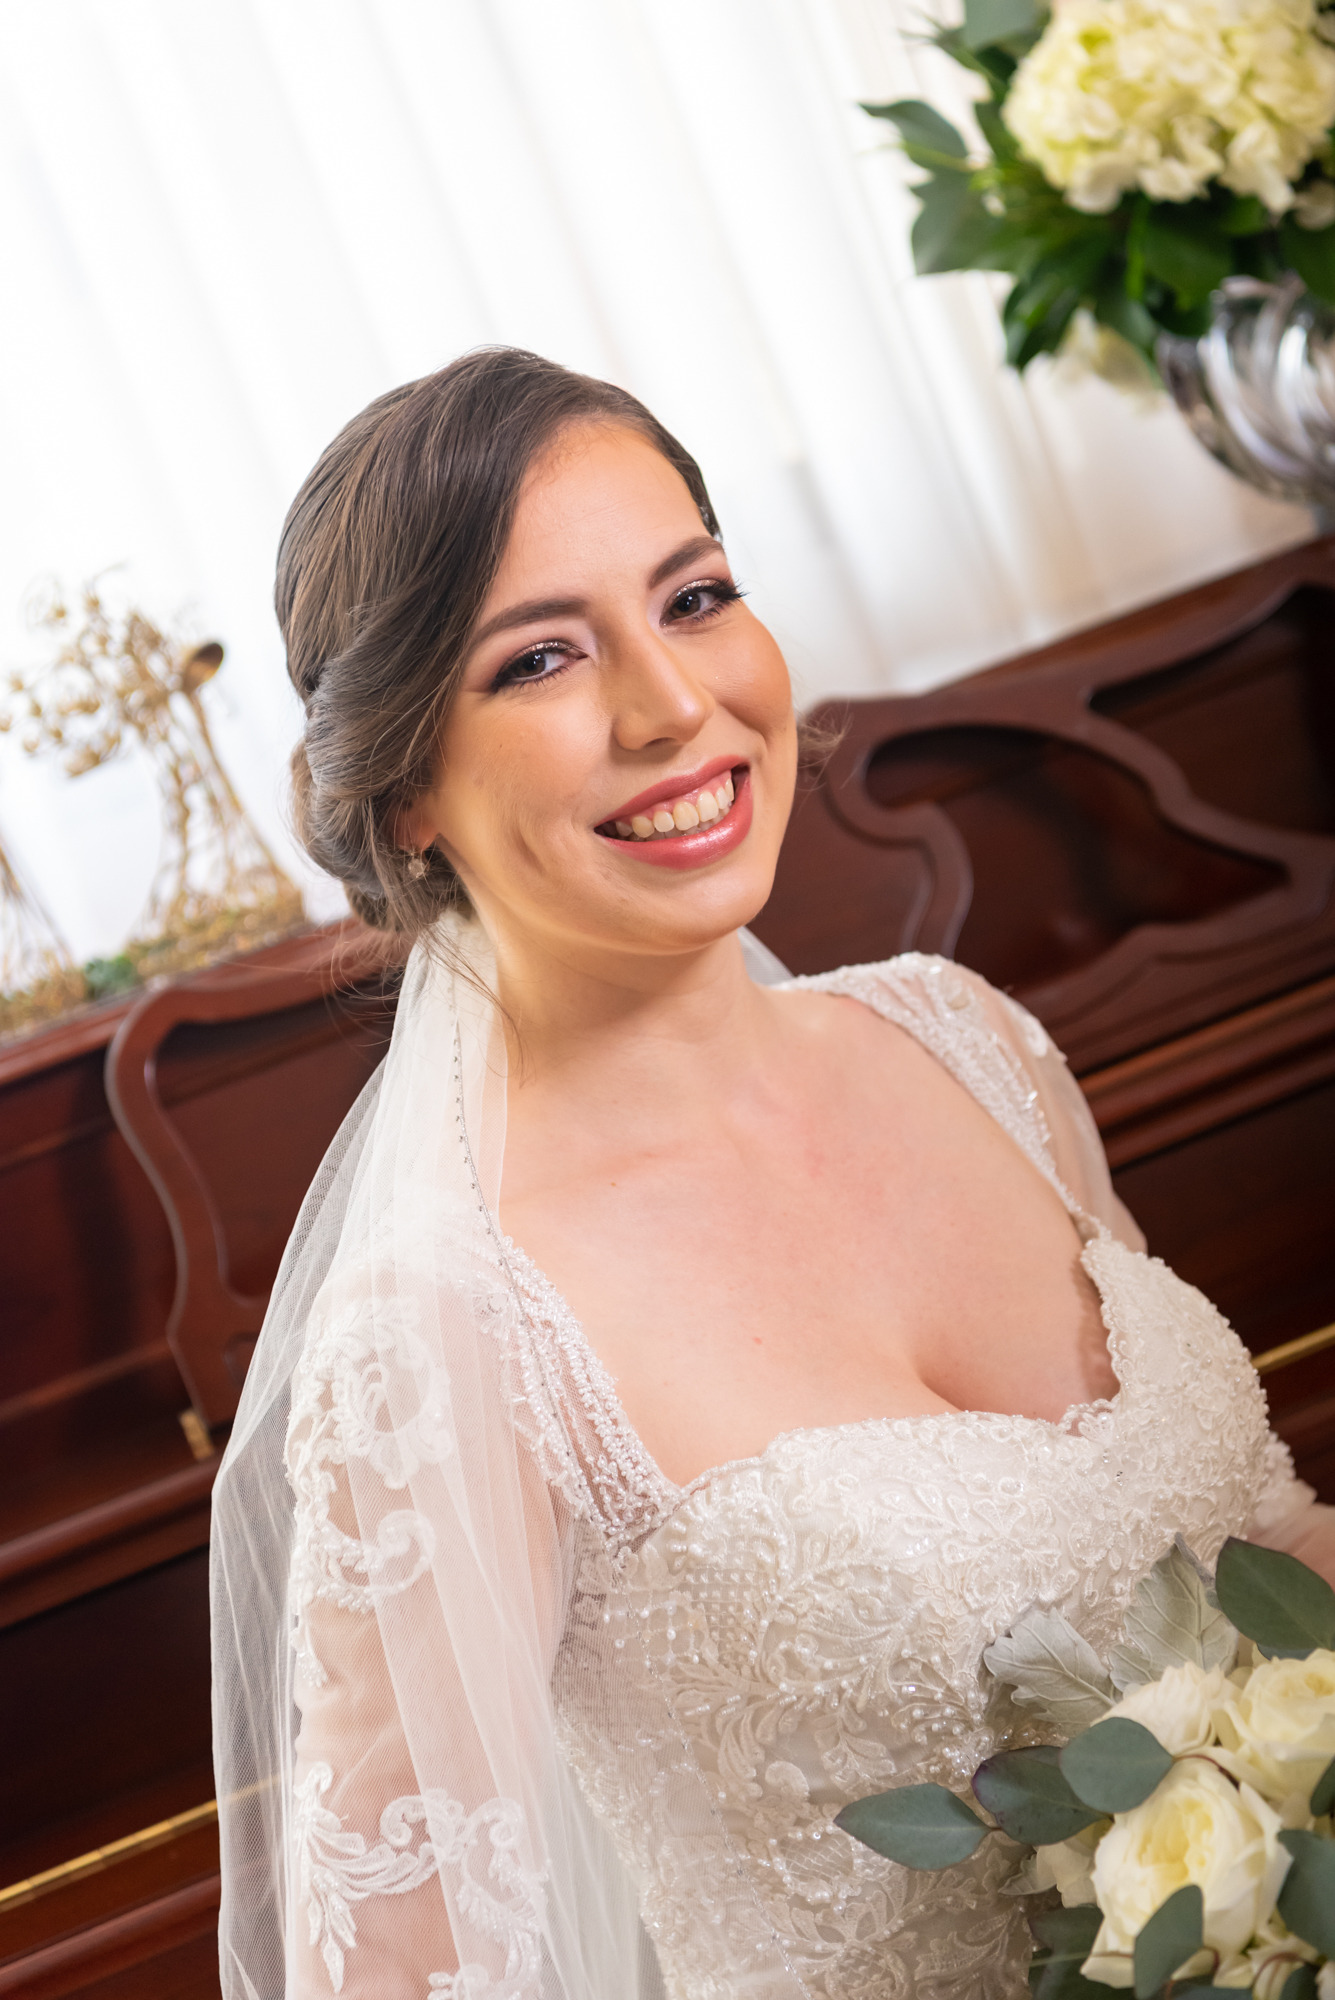 Beautifu bride smiling